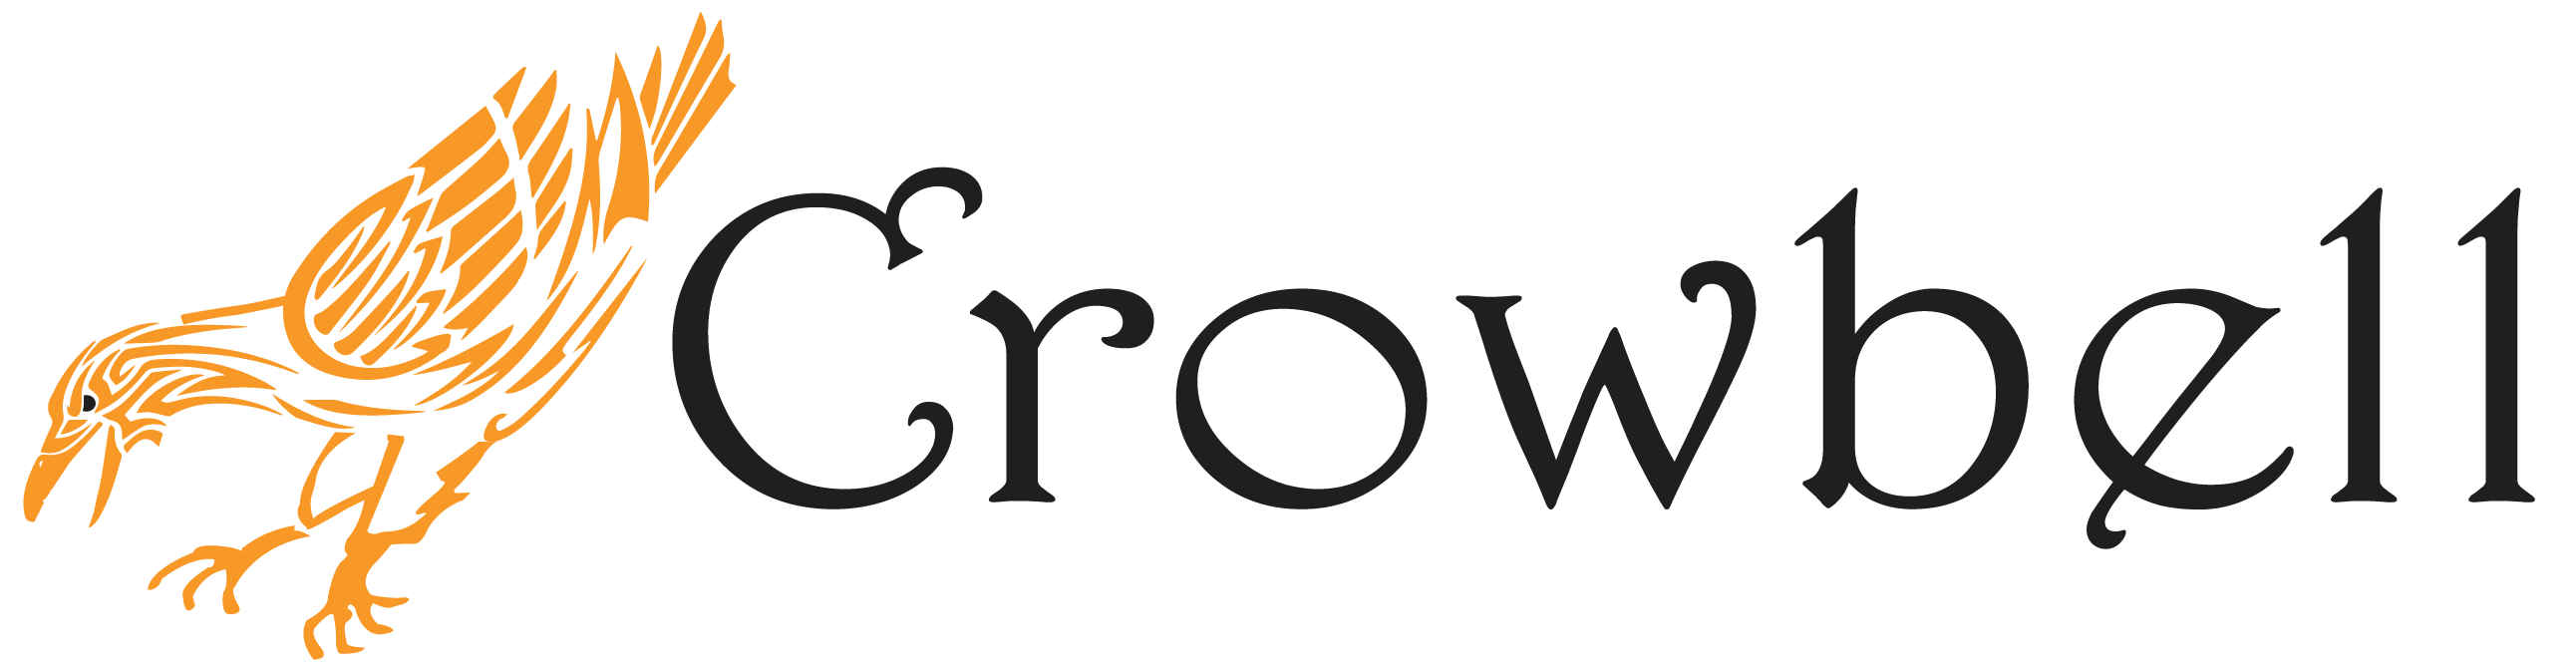 CROWBELL Logo